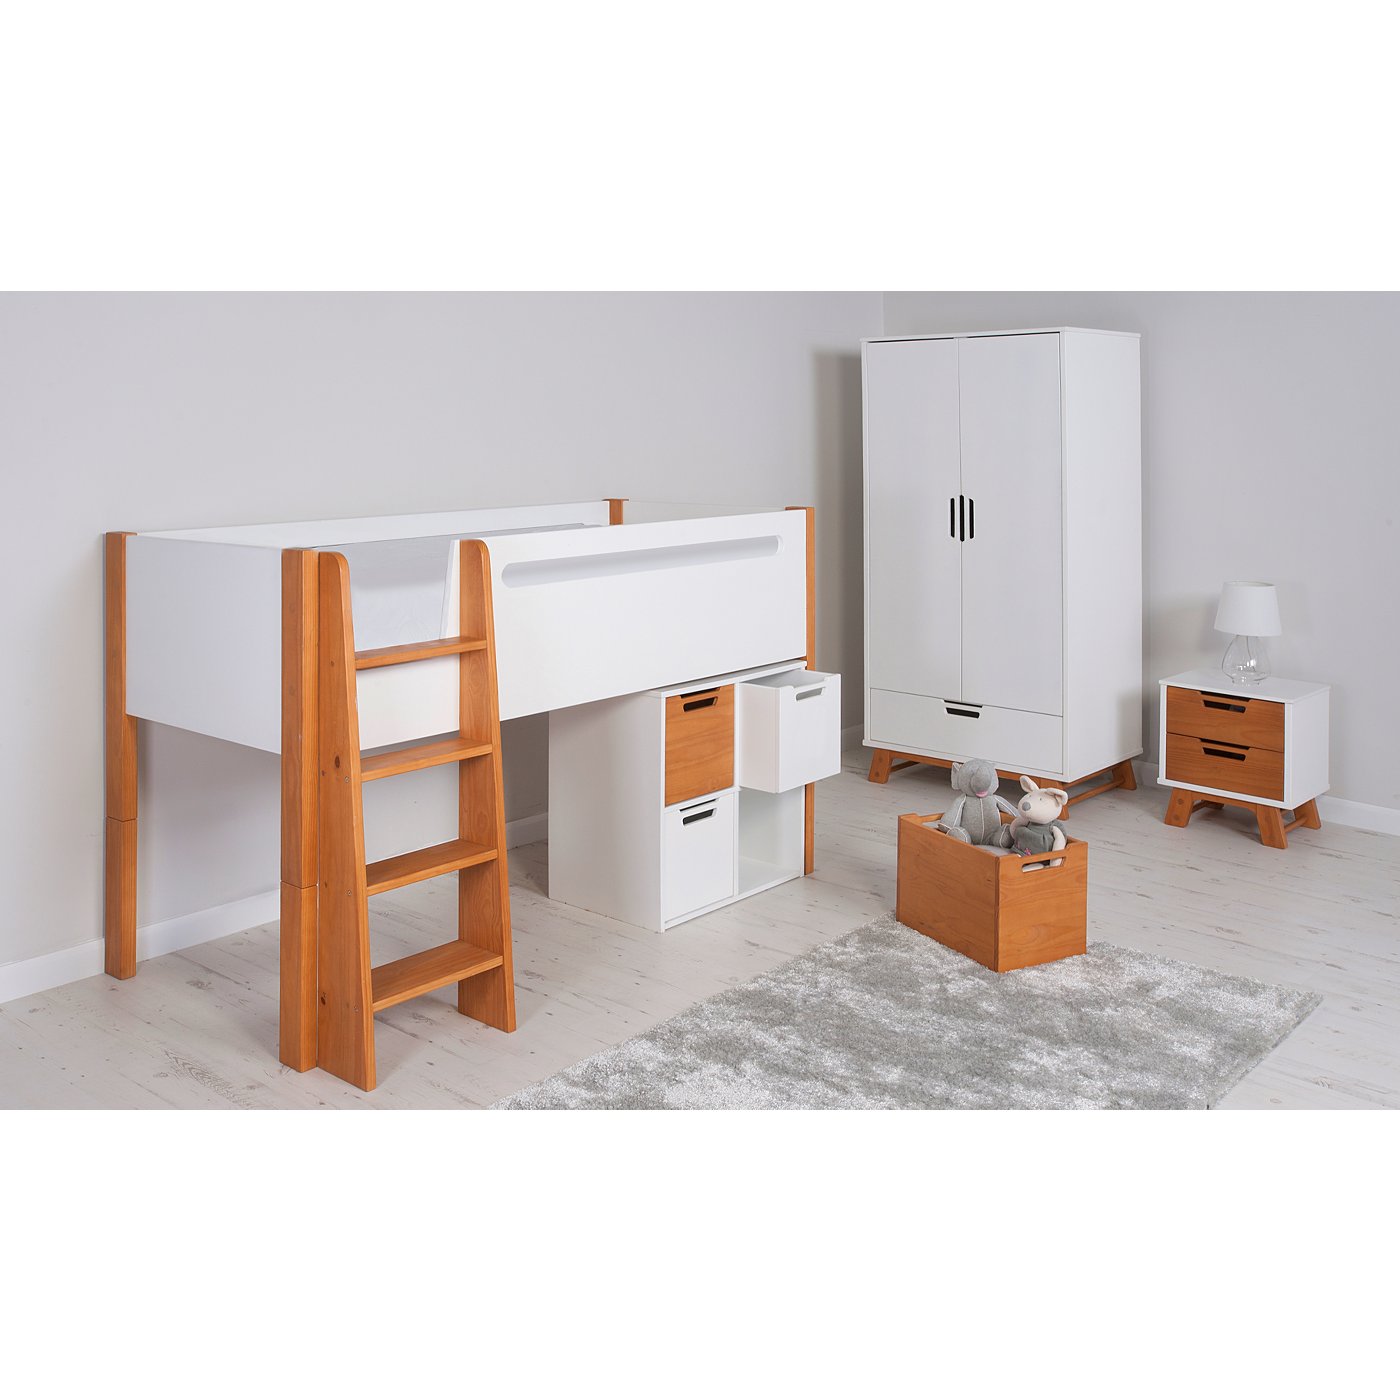 Alfie Kids Furniture Range Oak Effect And White Kids Beds